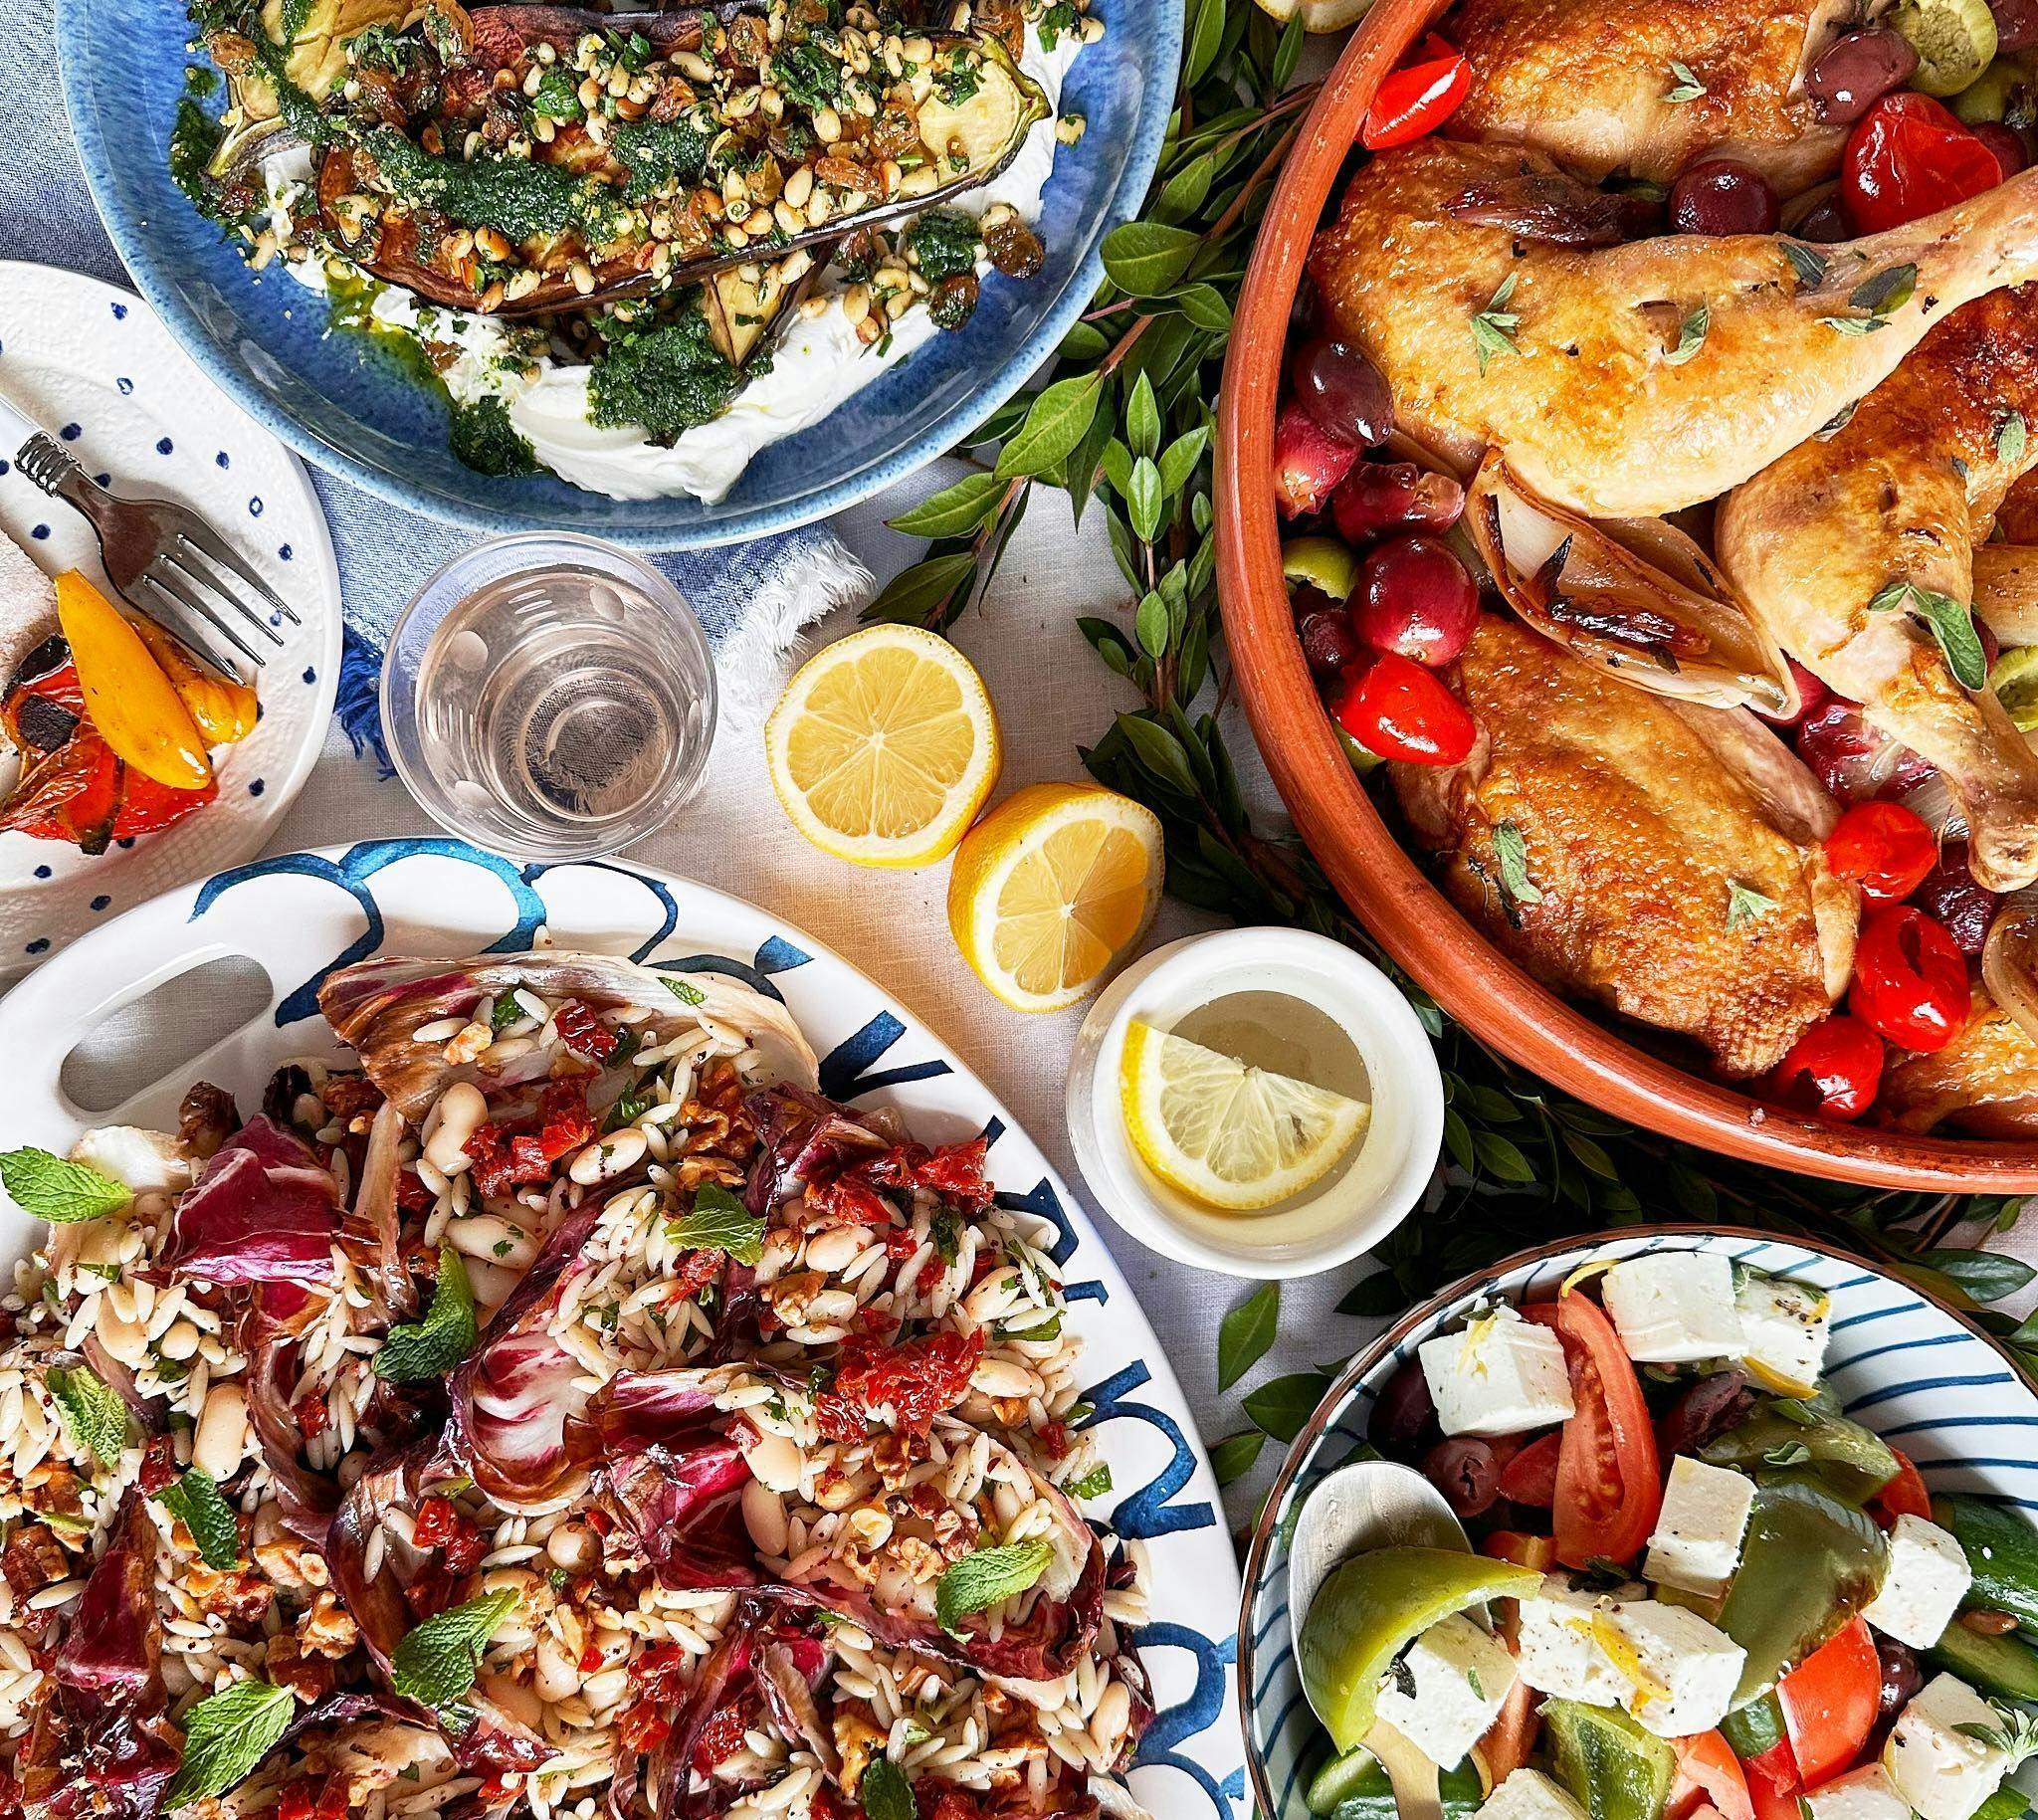 Mediterranean spread with roast chicken, radicchio orzo salad, feta tomato salad, and charred eggplant with herbs